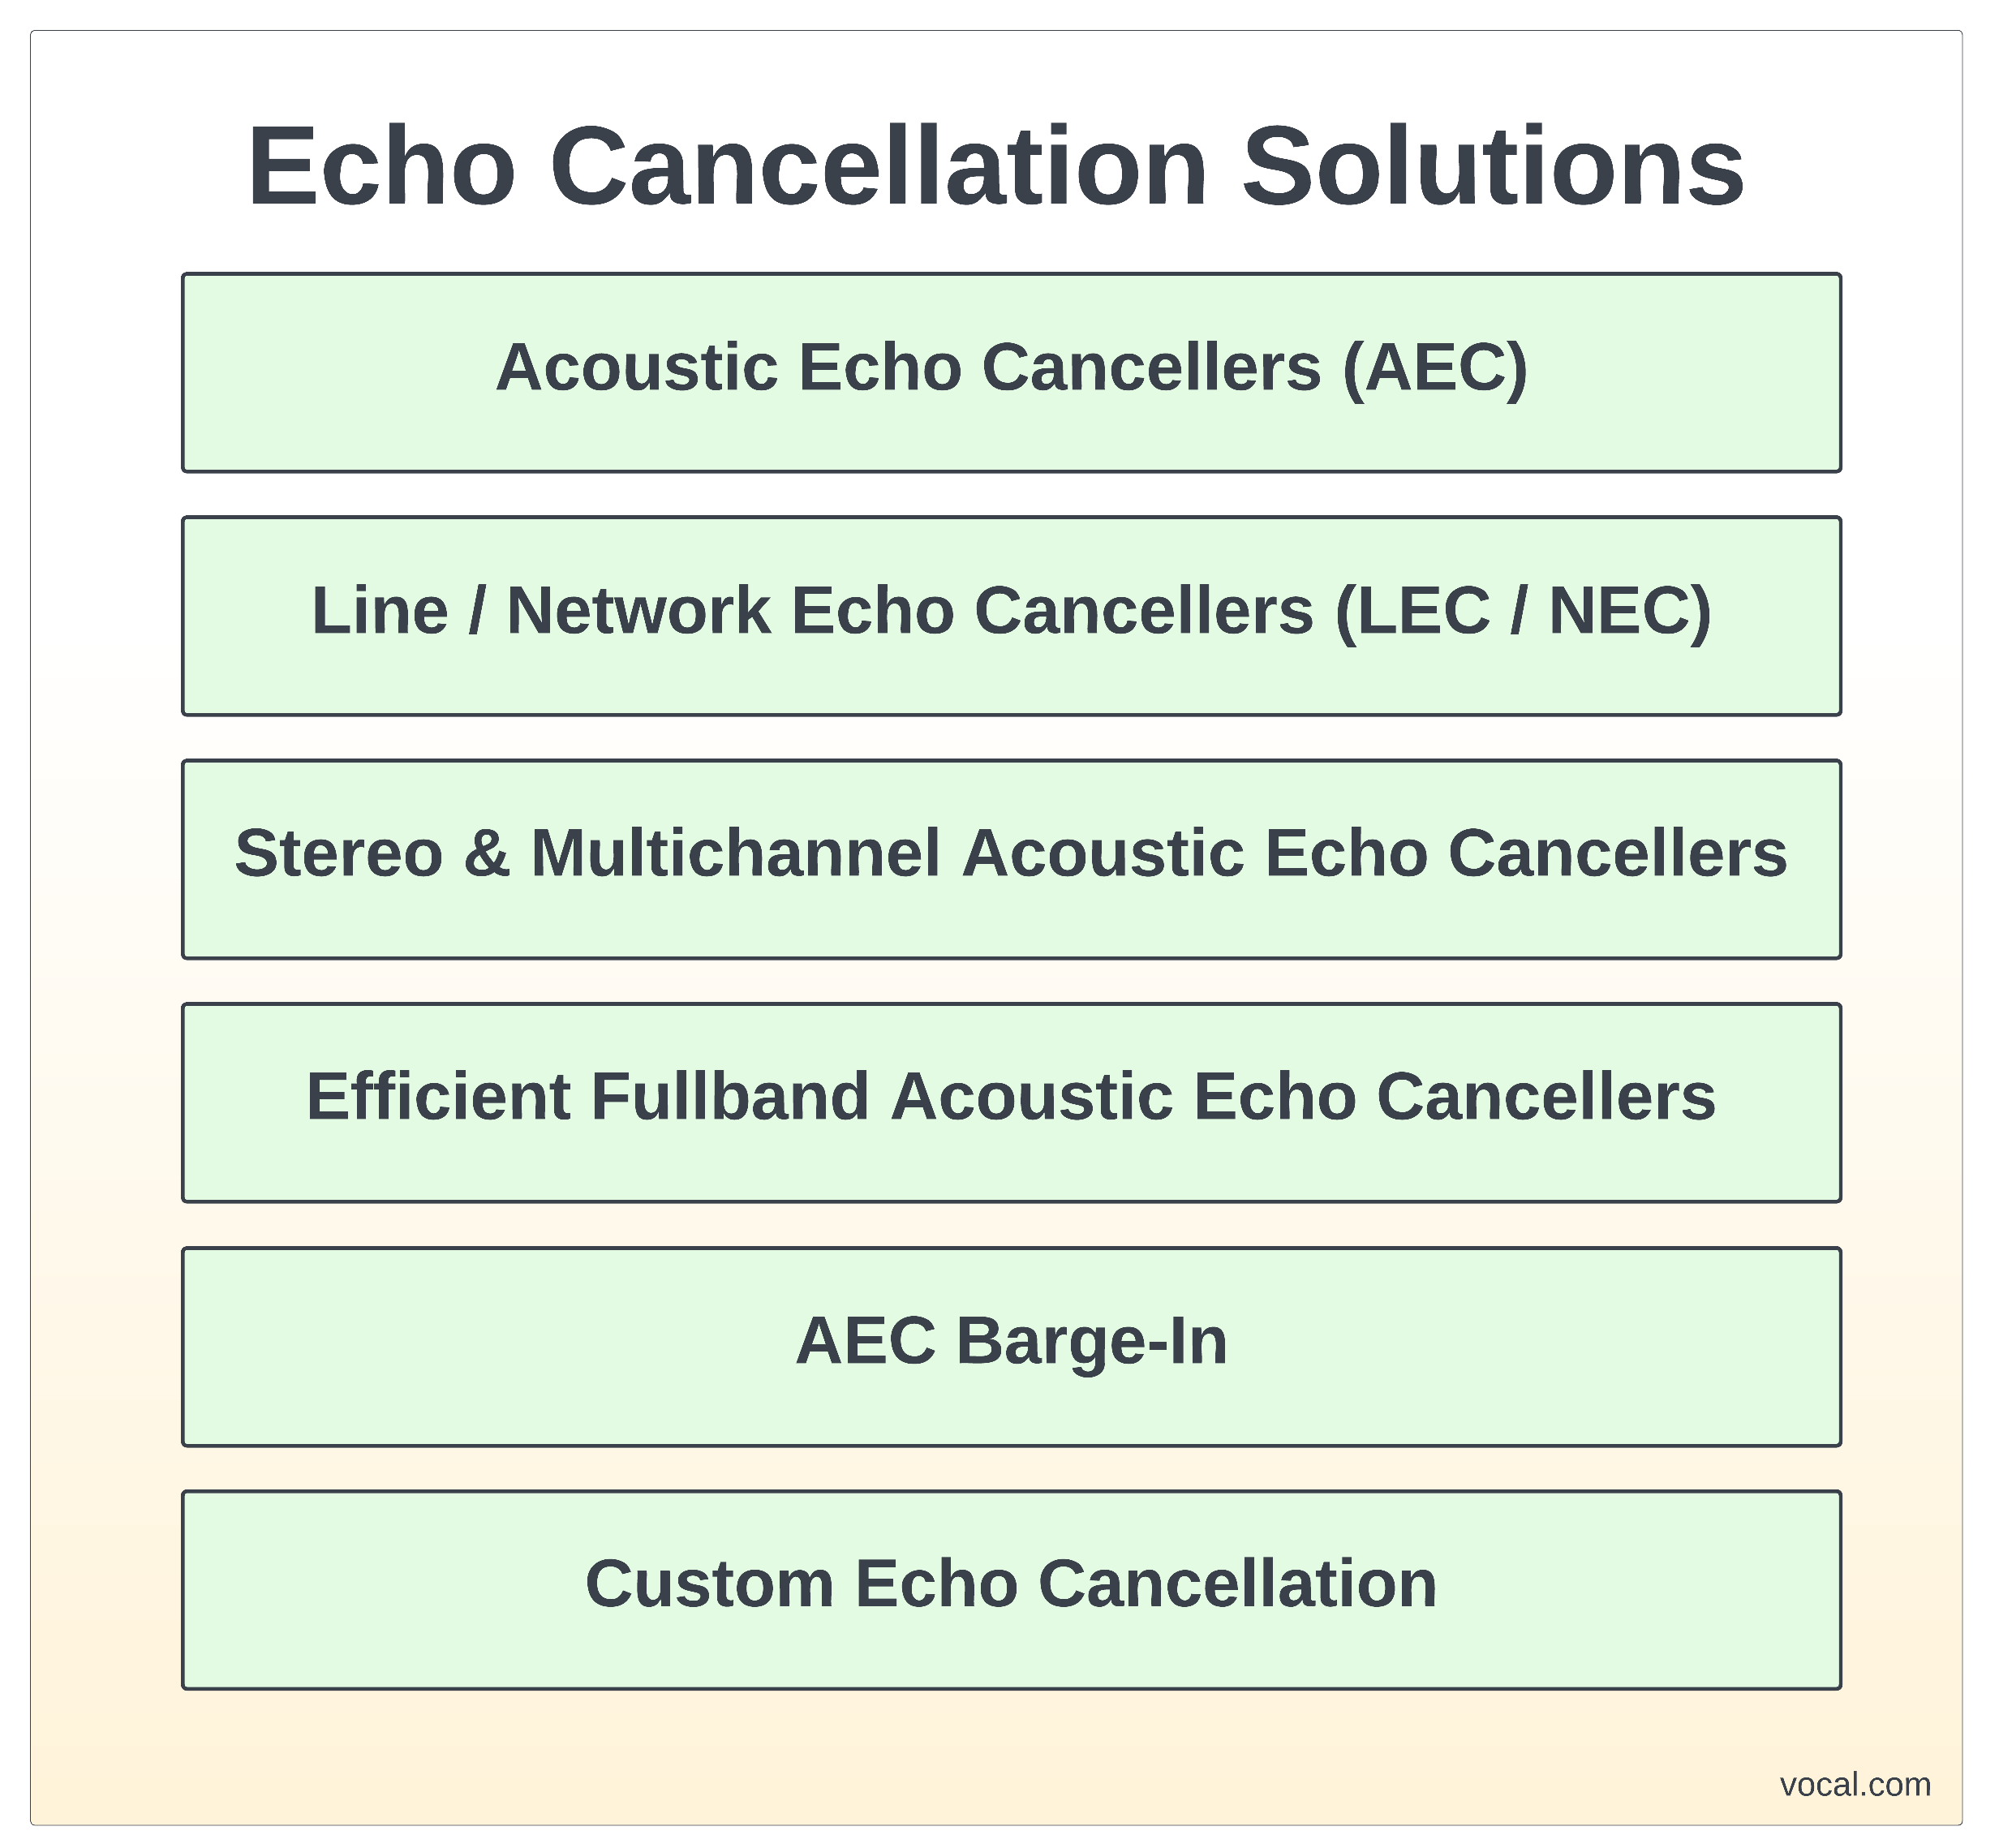 Echo Cancellation | VOCAL Technologies